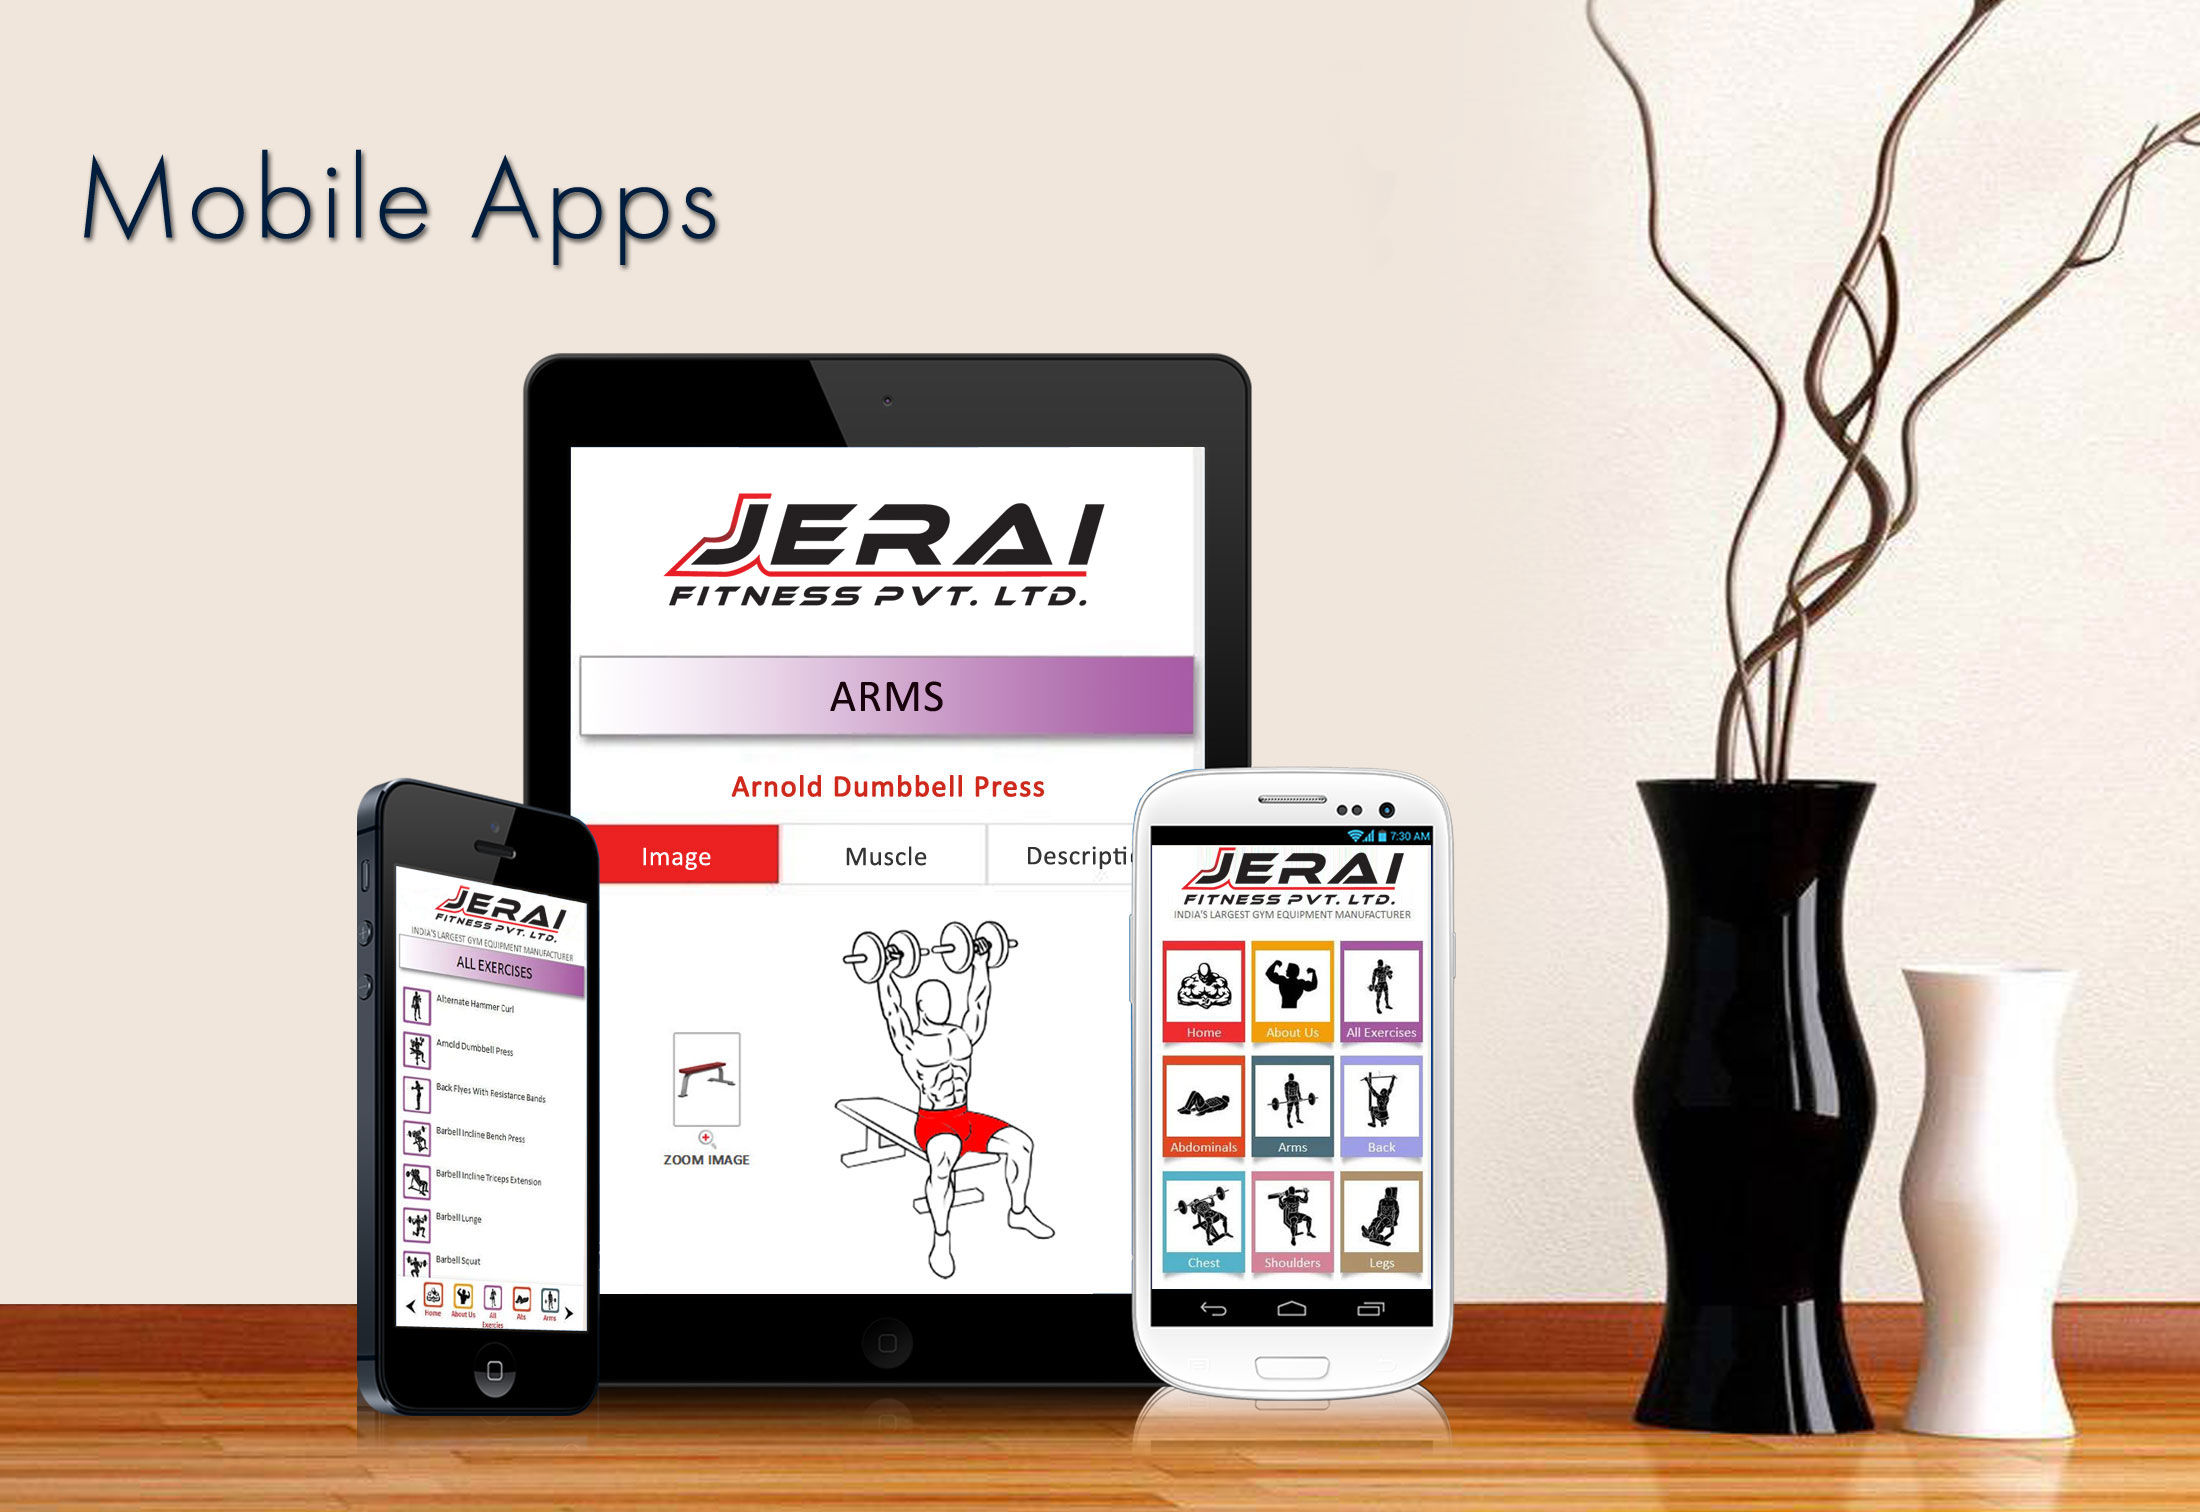 Design Accent India Mobile Apps